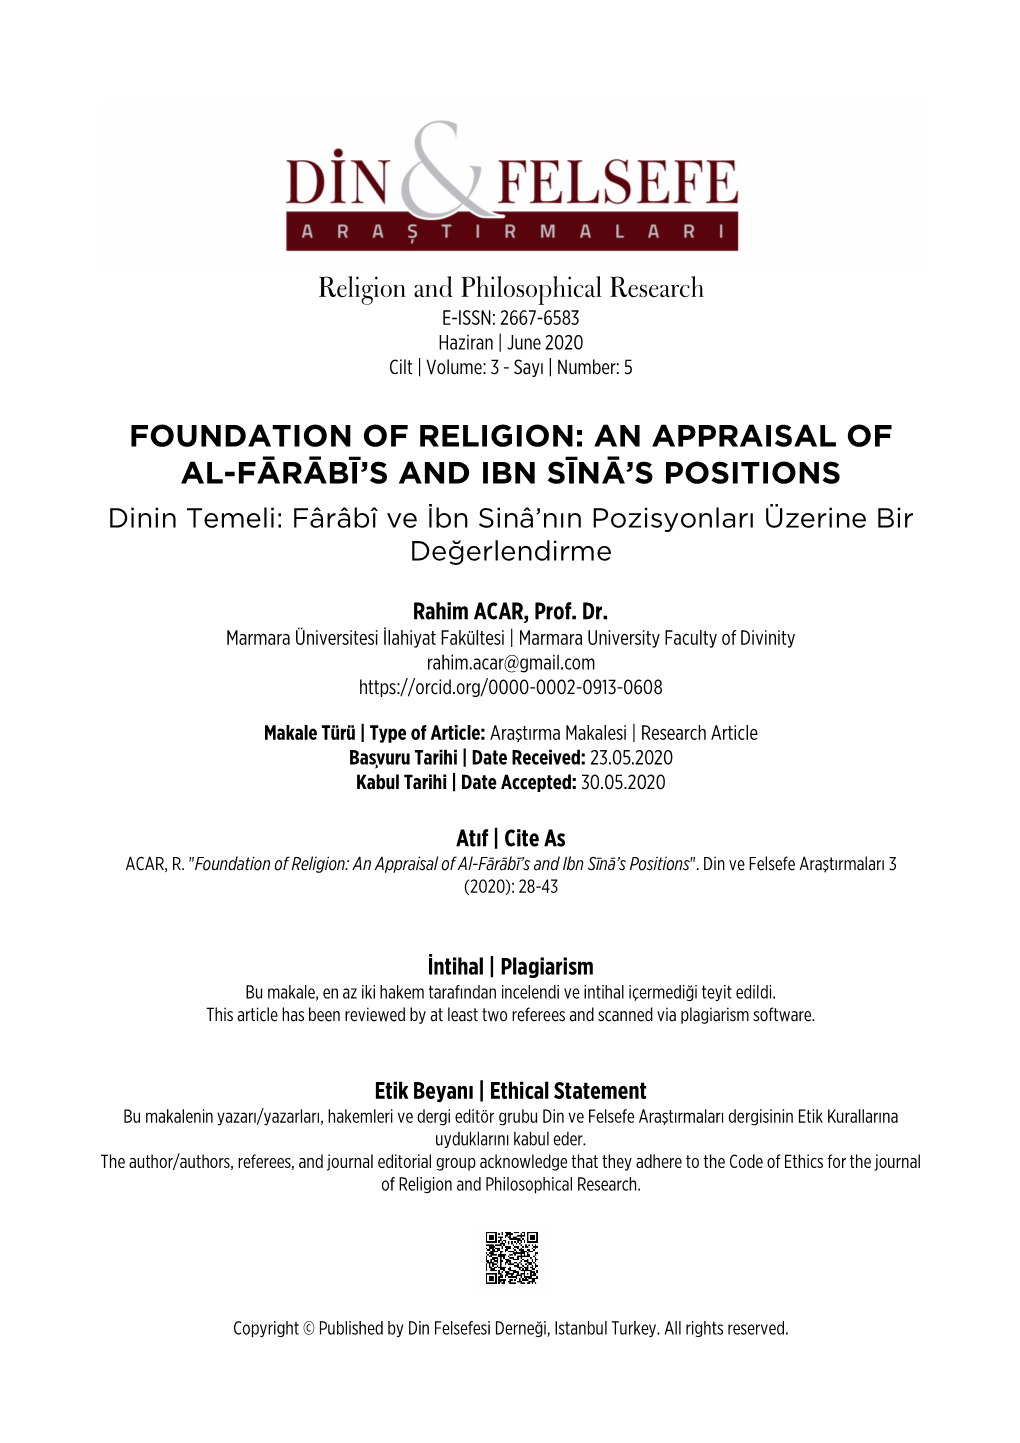 Foundation of Religion: an Appraisal of Al-Fārābī's and Ibn Sīnā's Positions